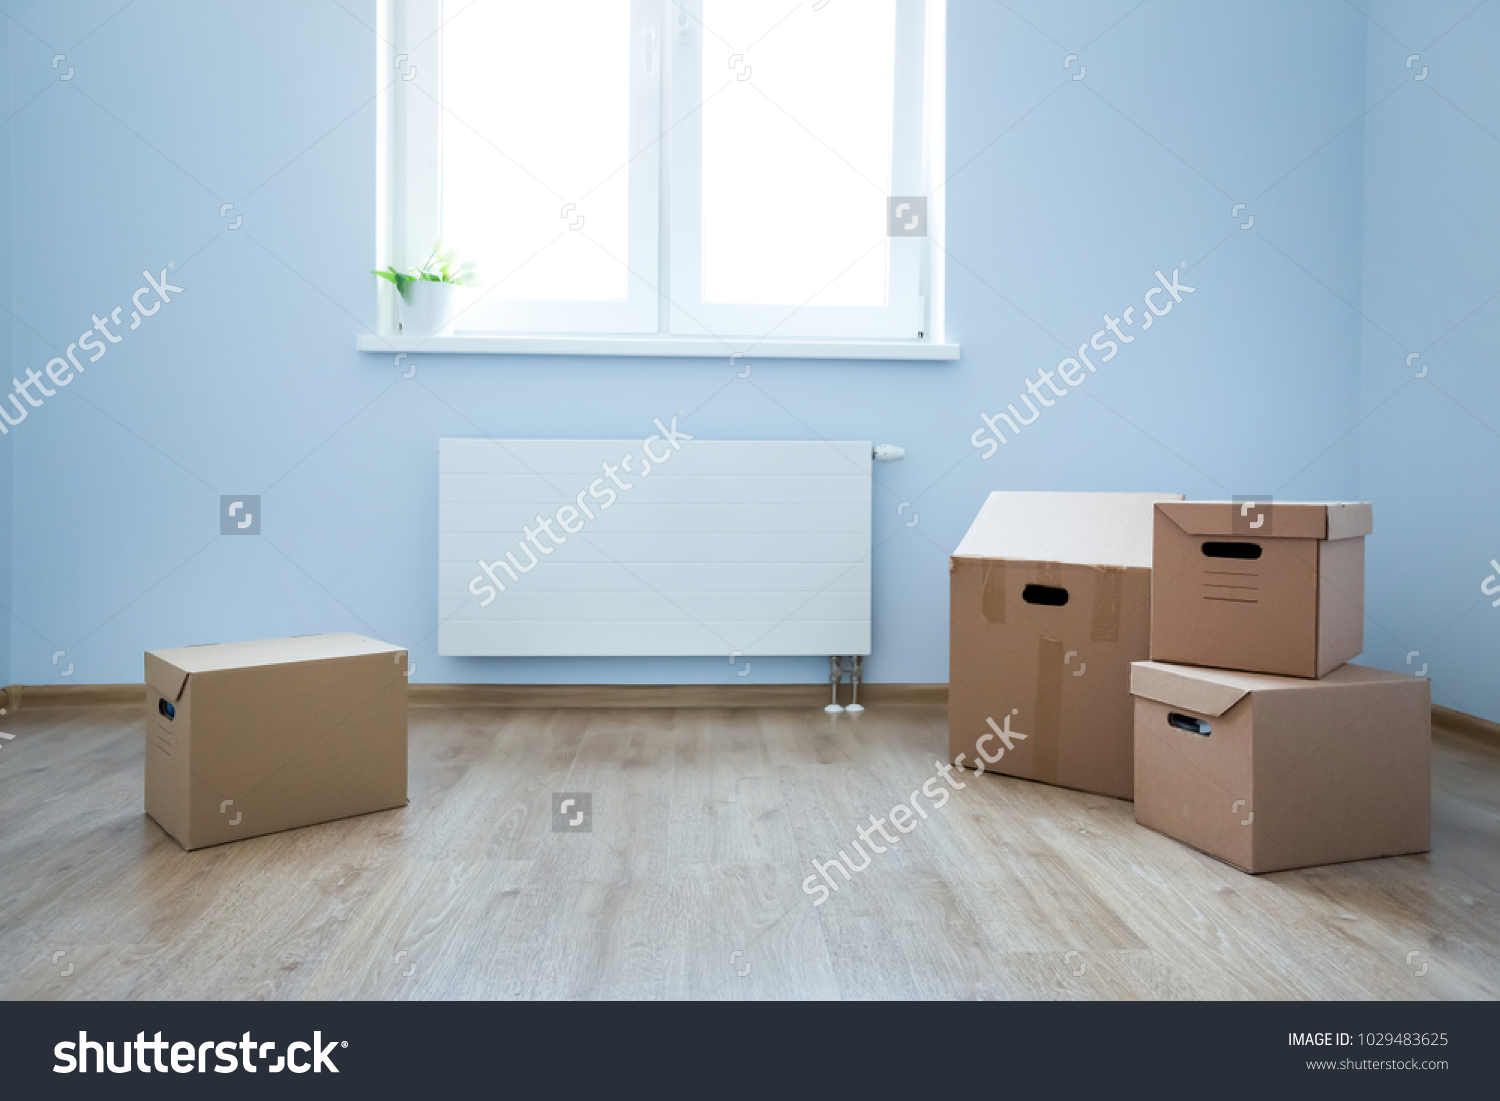 Cardboard Boxes On Laminate Floor Empty Stock Photo Edit Now